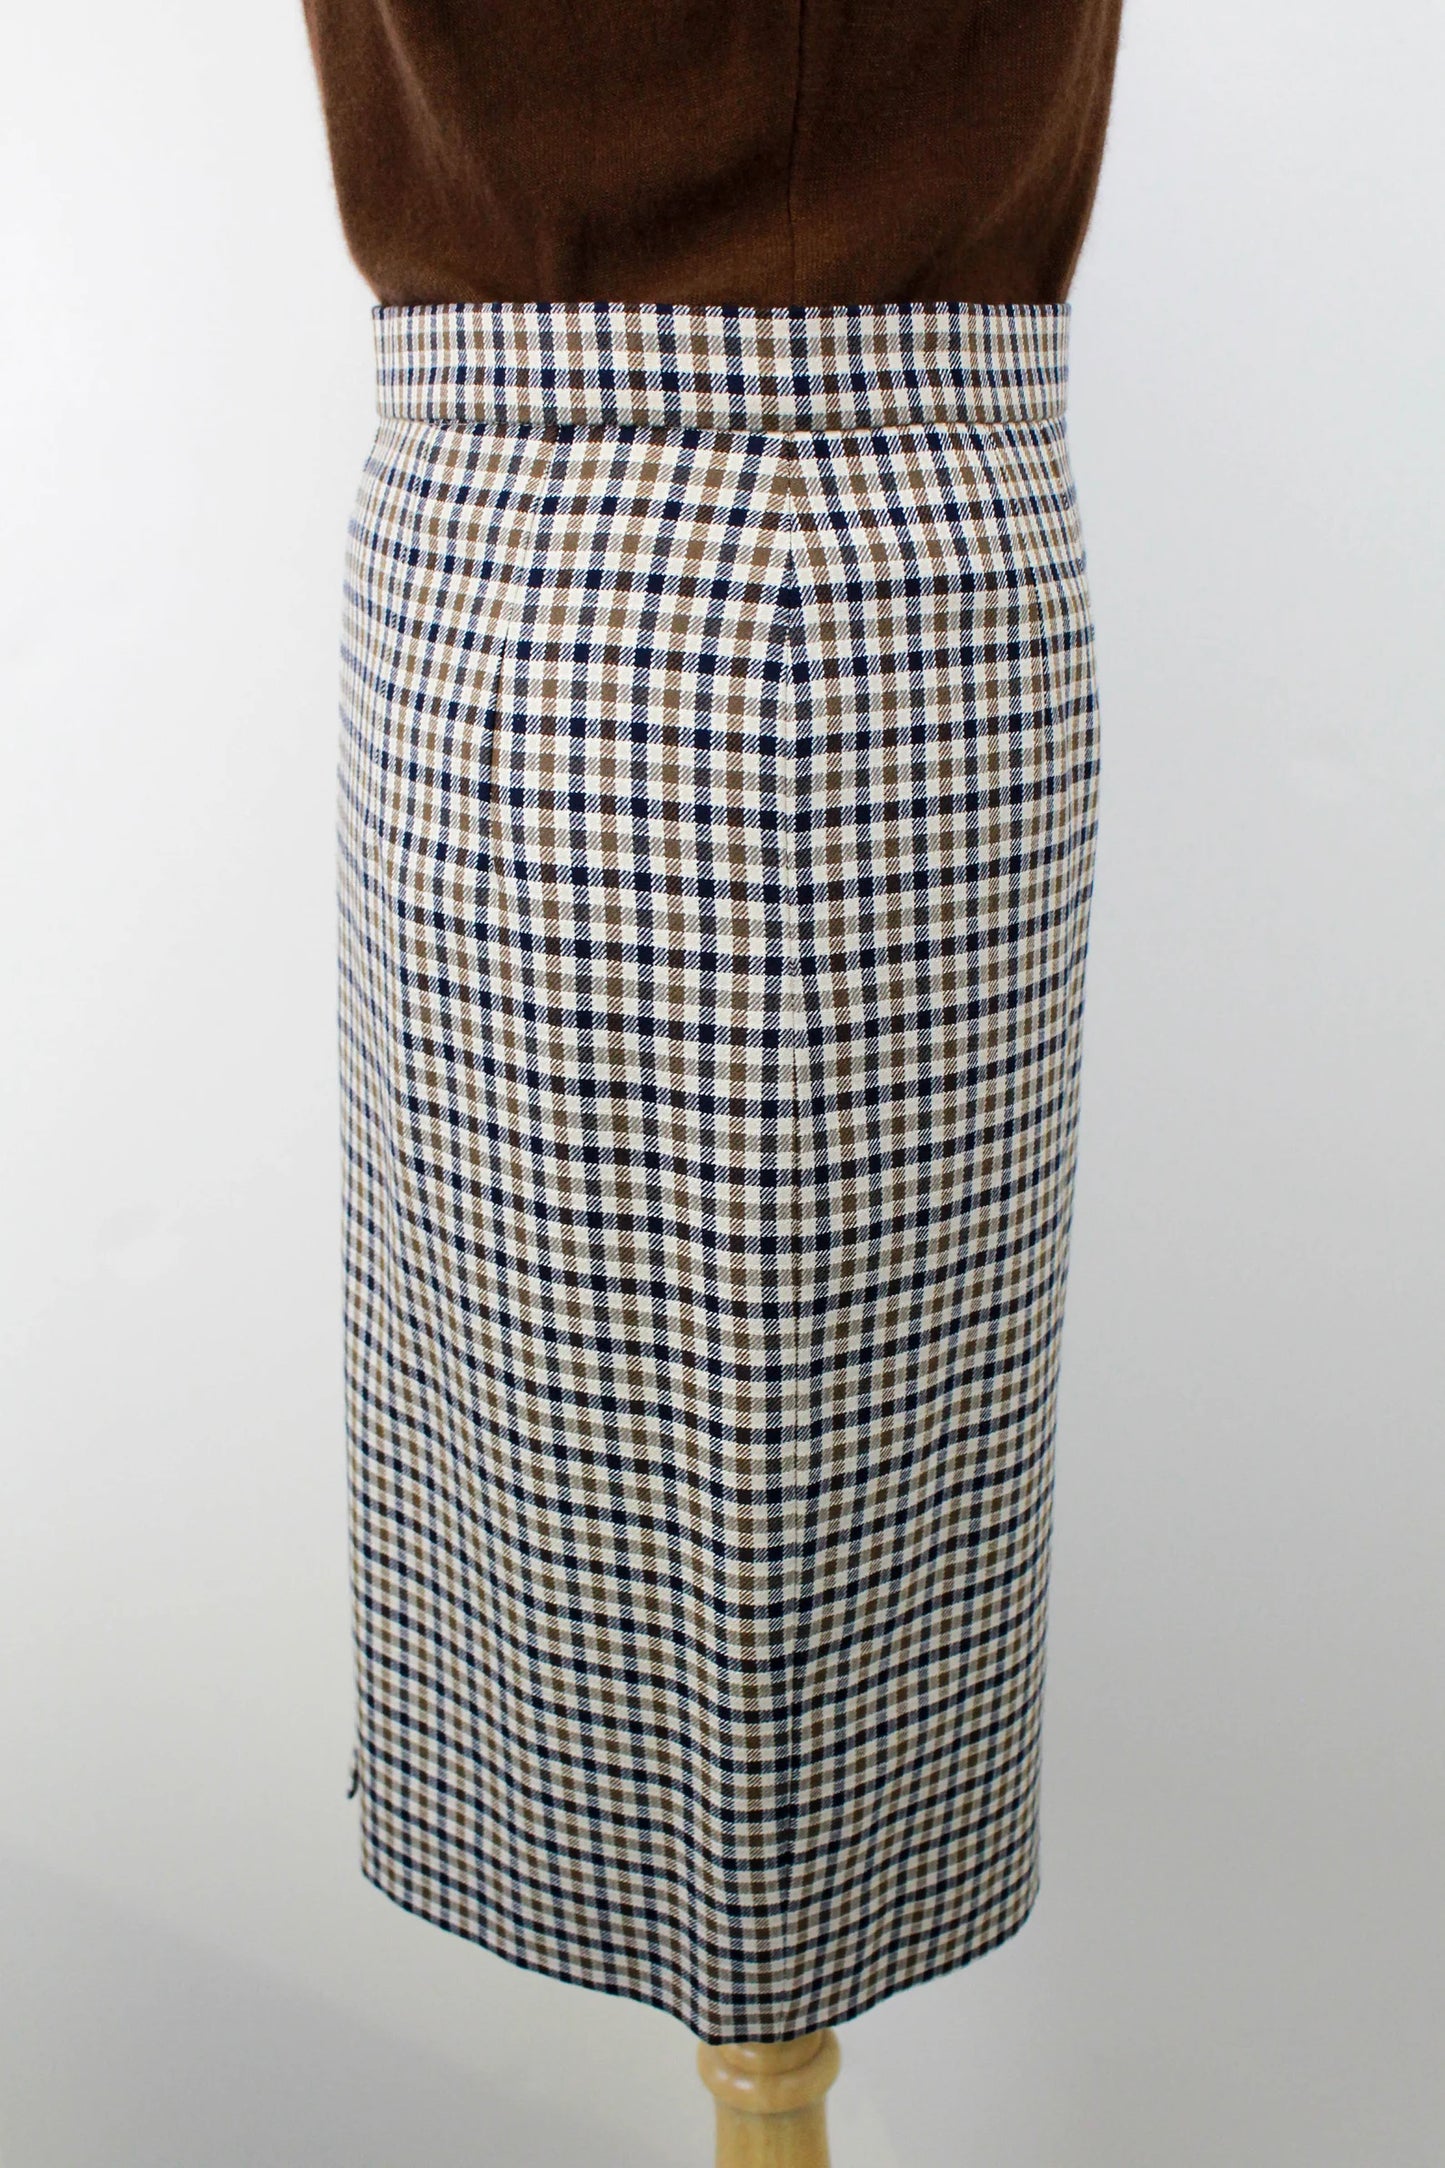 90s Brown Checked Skirt, Vintage 1990s Mini Skirt, Aquascutum Minimalist Preppy Skirt, Waist 29